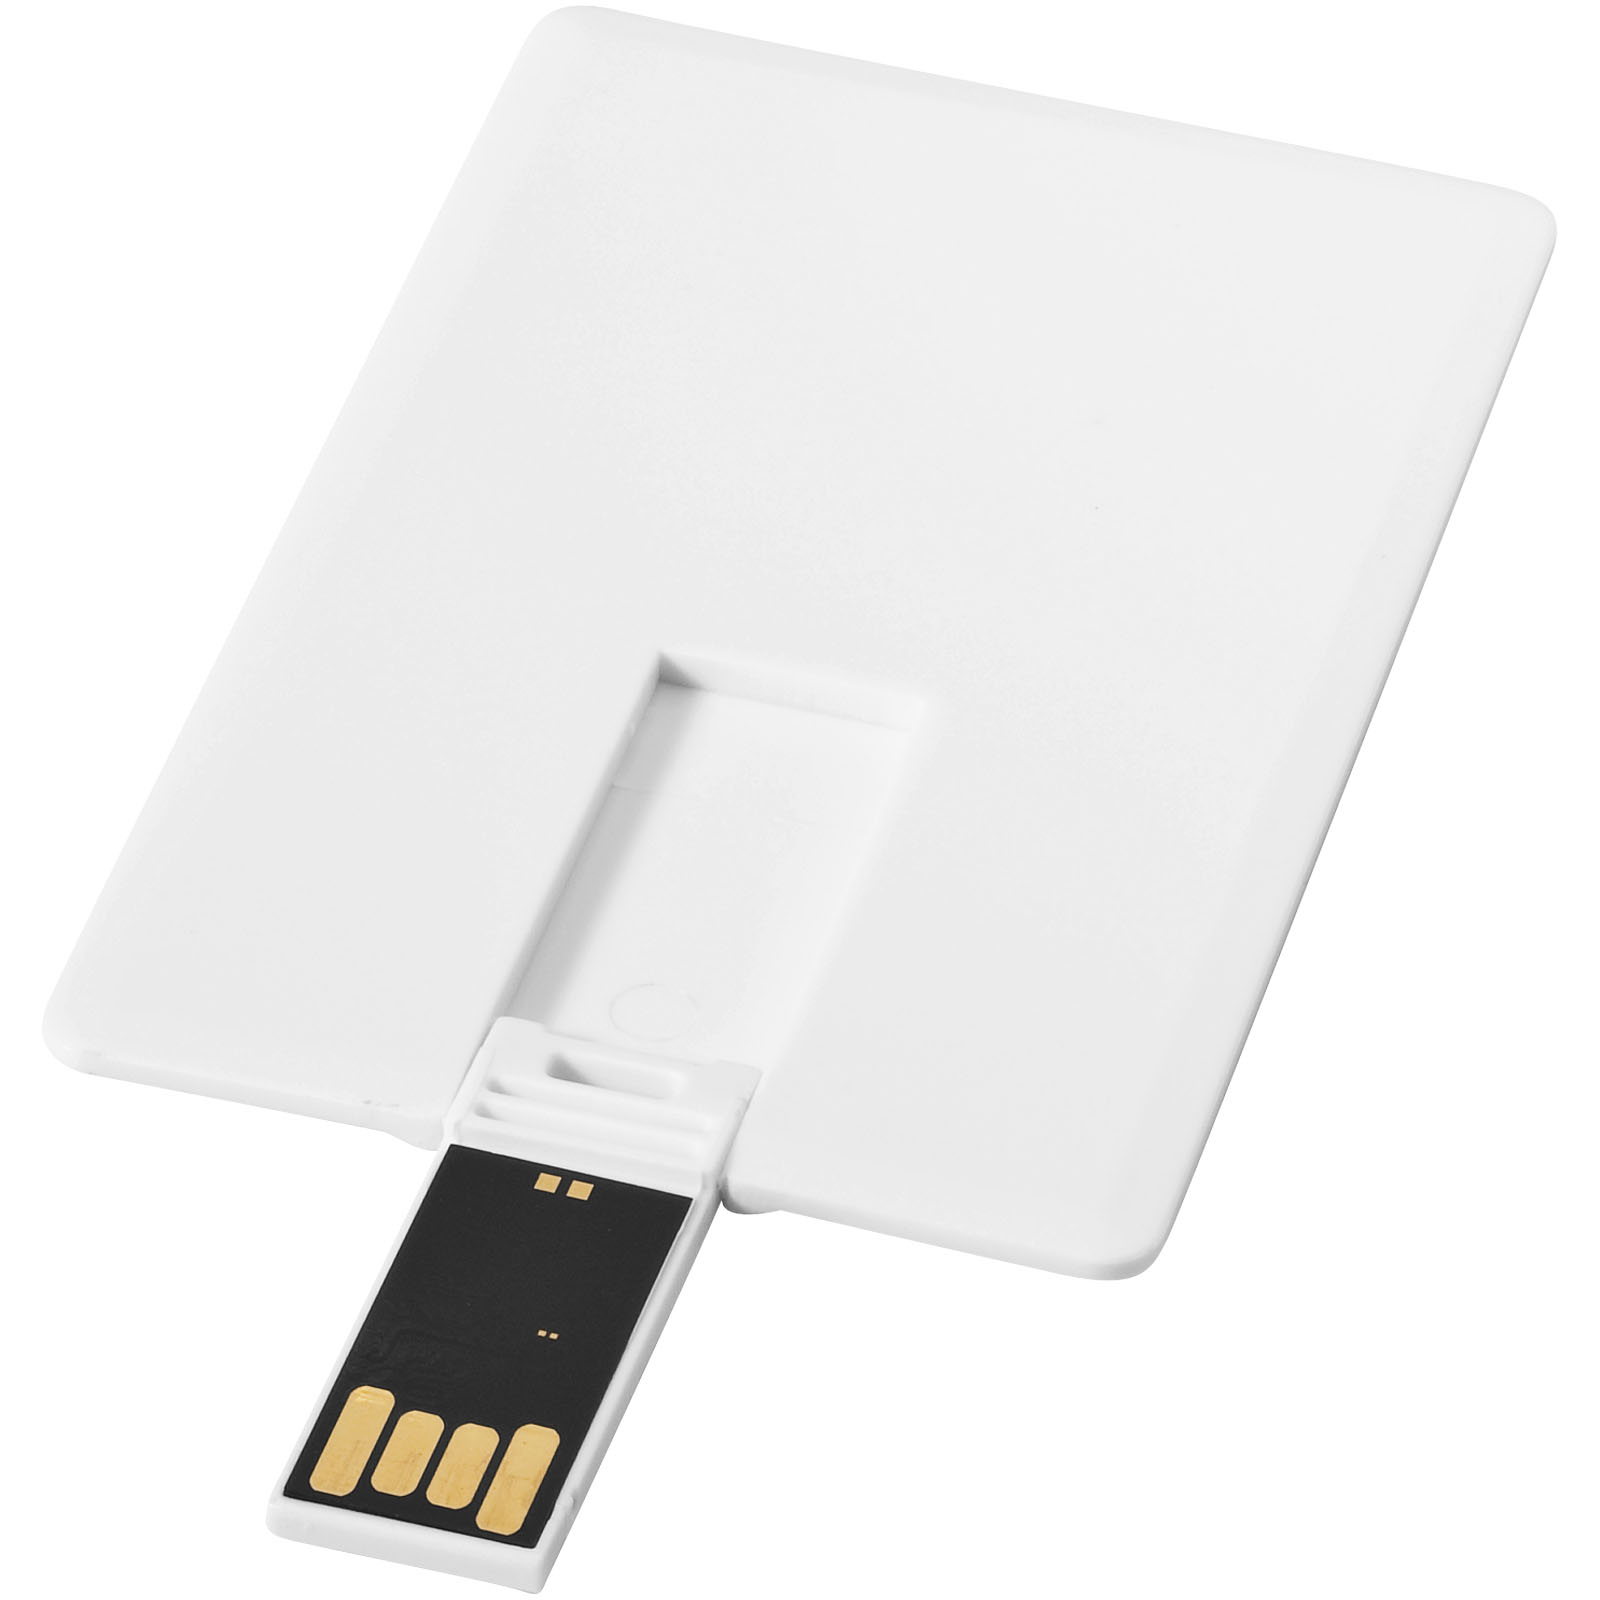 Technology - Slim card-shaped 2GB USB flash drive